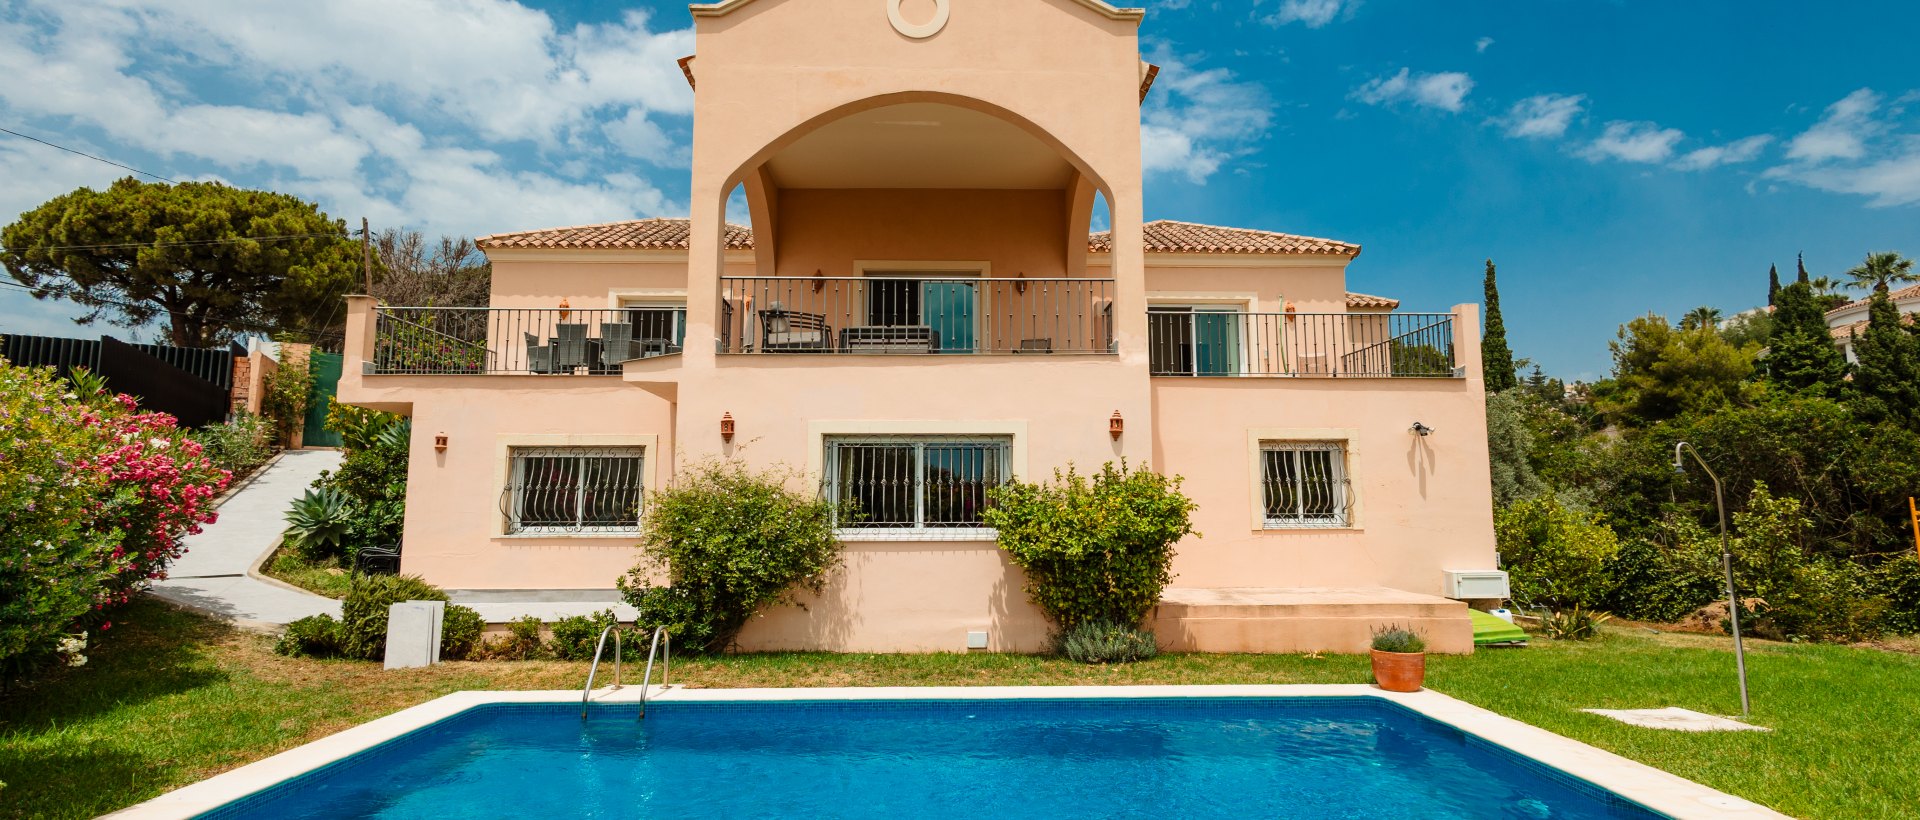 Unglaubliche Villa mit 5 Schlafzimmern, privatem Pool und Meerblick in El Rosario, Marbella